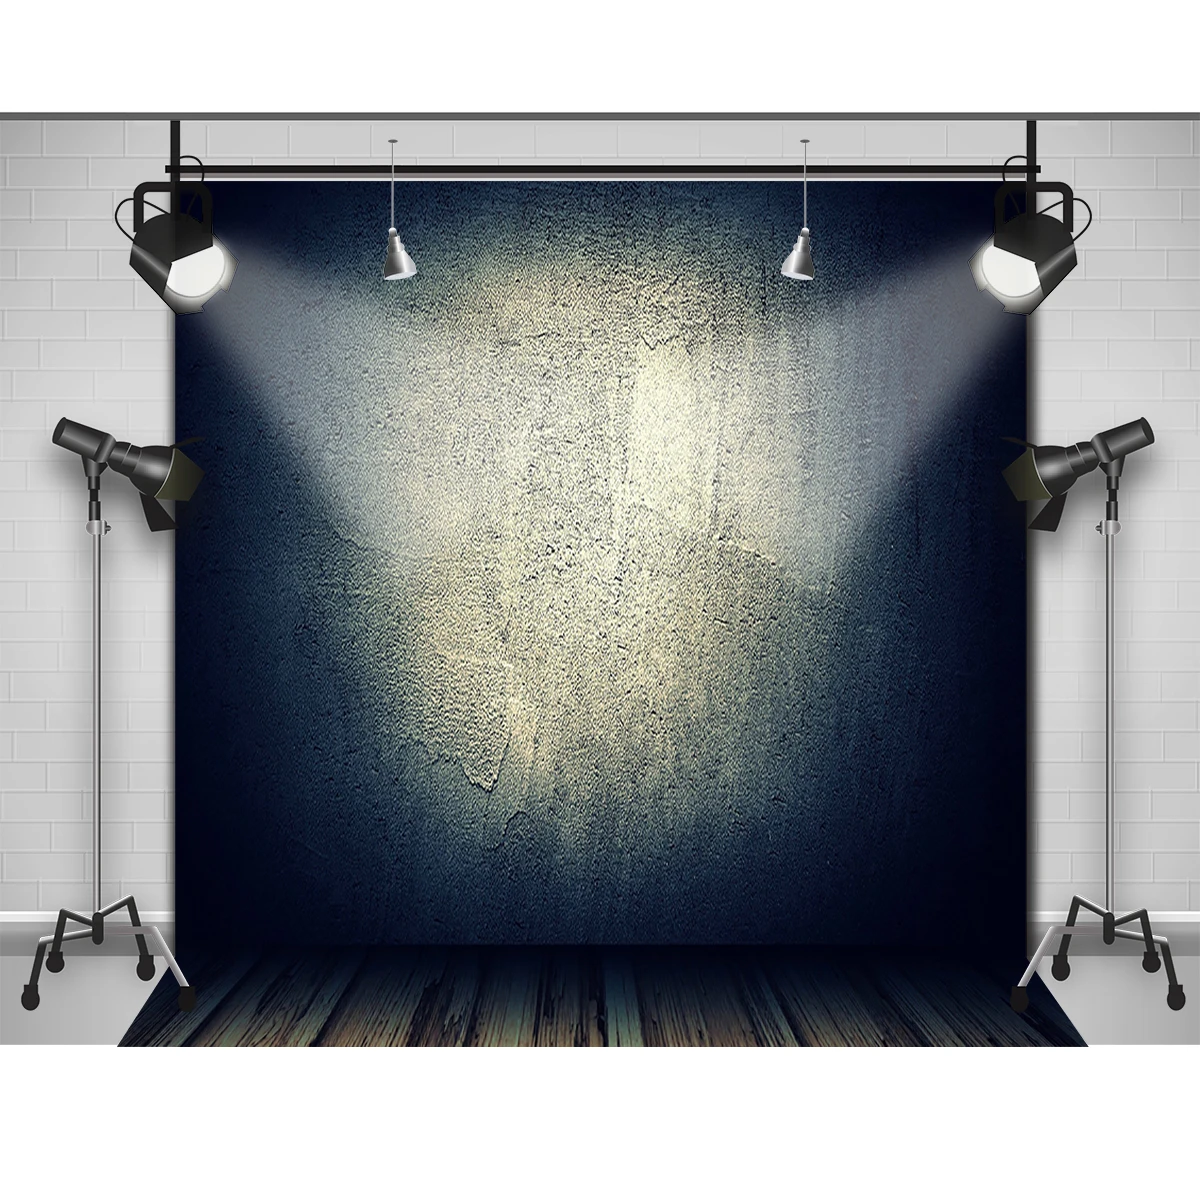 Fotografija kulise Cementa steno chiaroscuro lesa zid okolij za foto studio